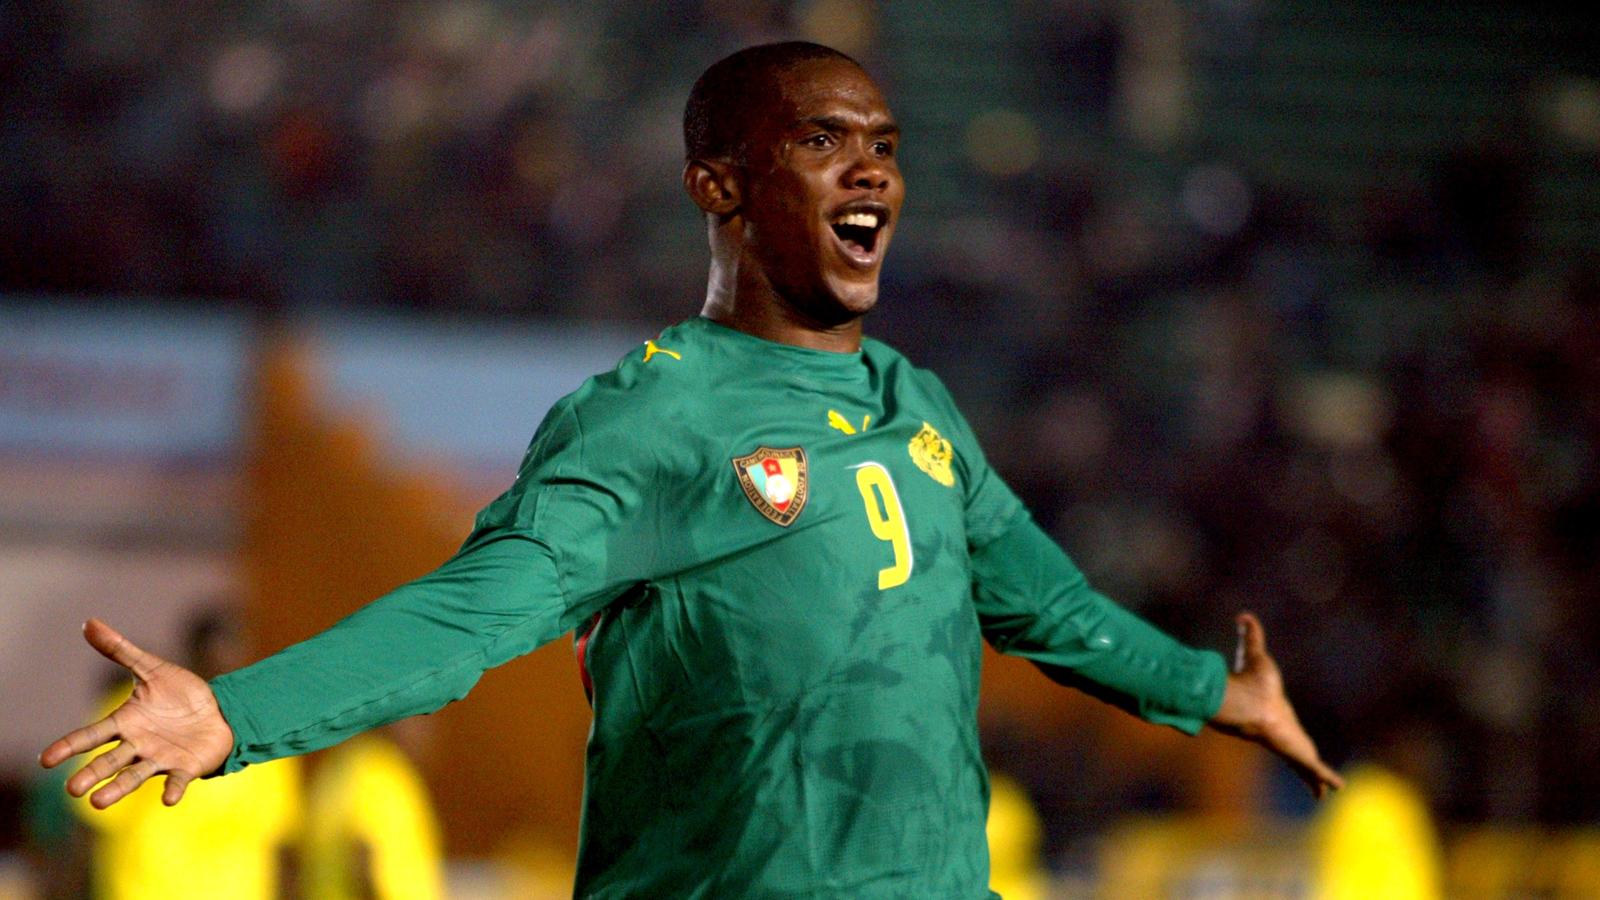 Match Cameroun vs RD Congo en direct live streaming